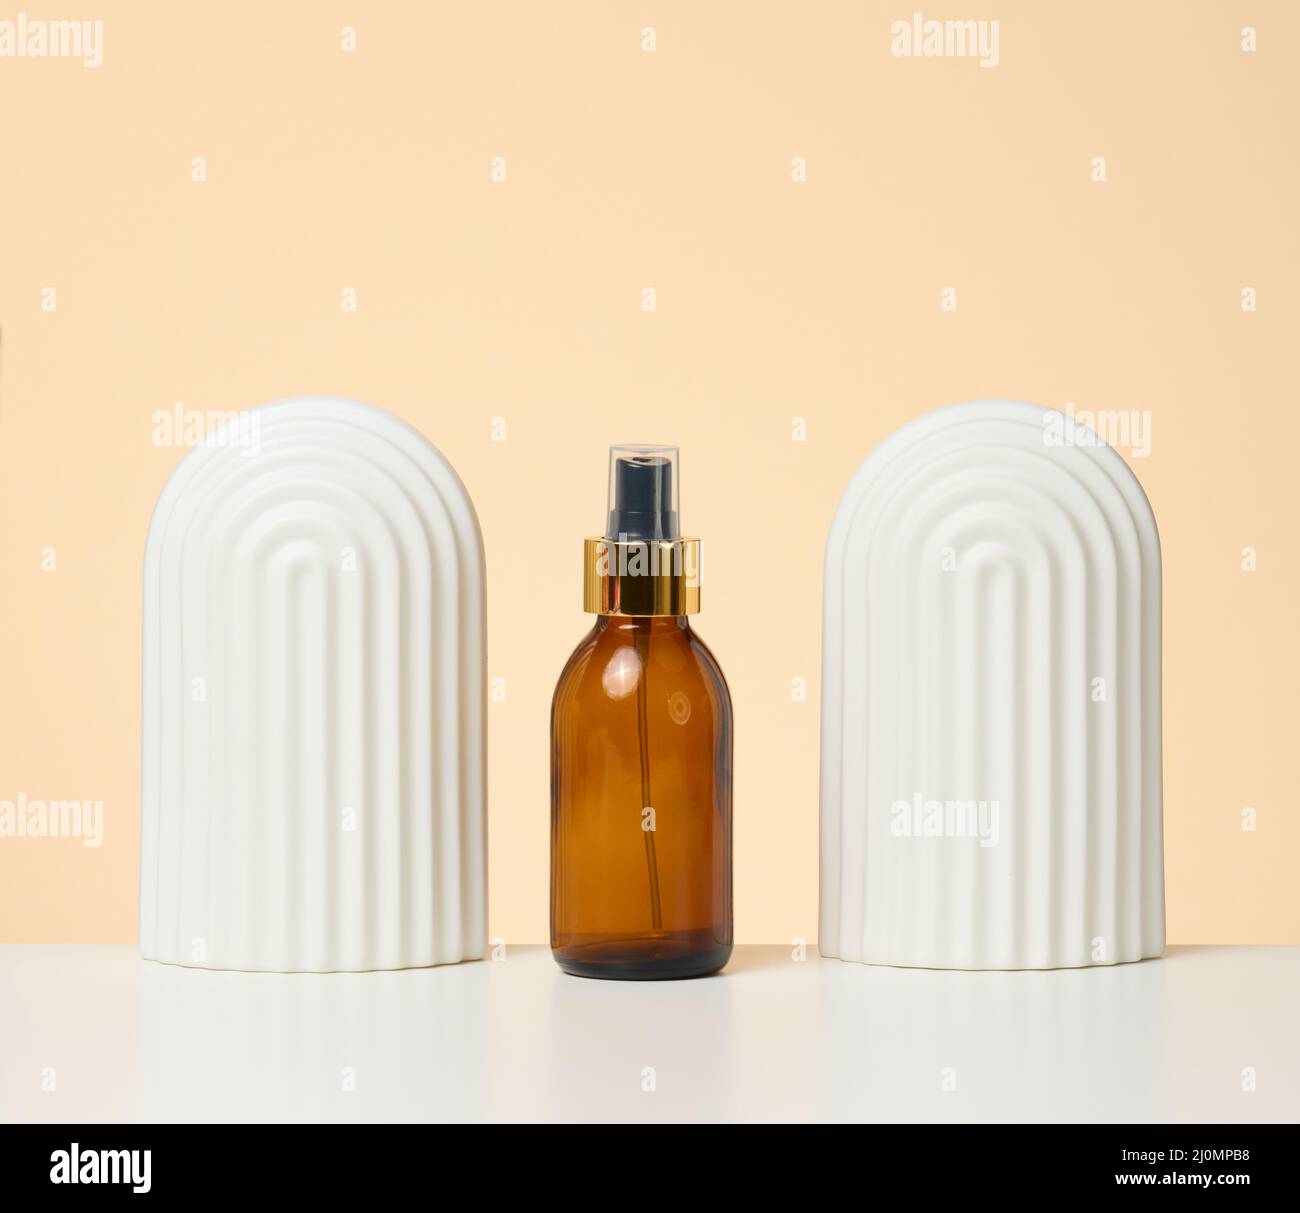 Packaging creativo para decorar botella de perfume.